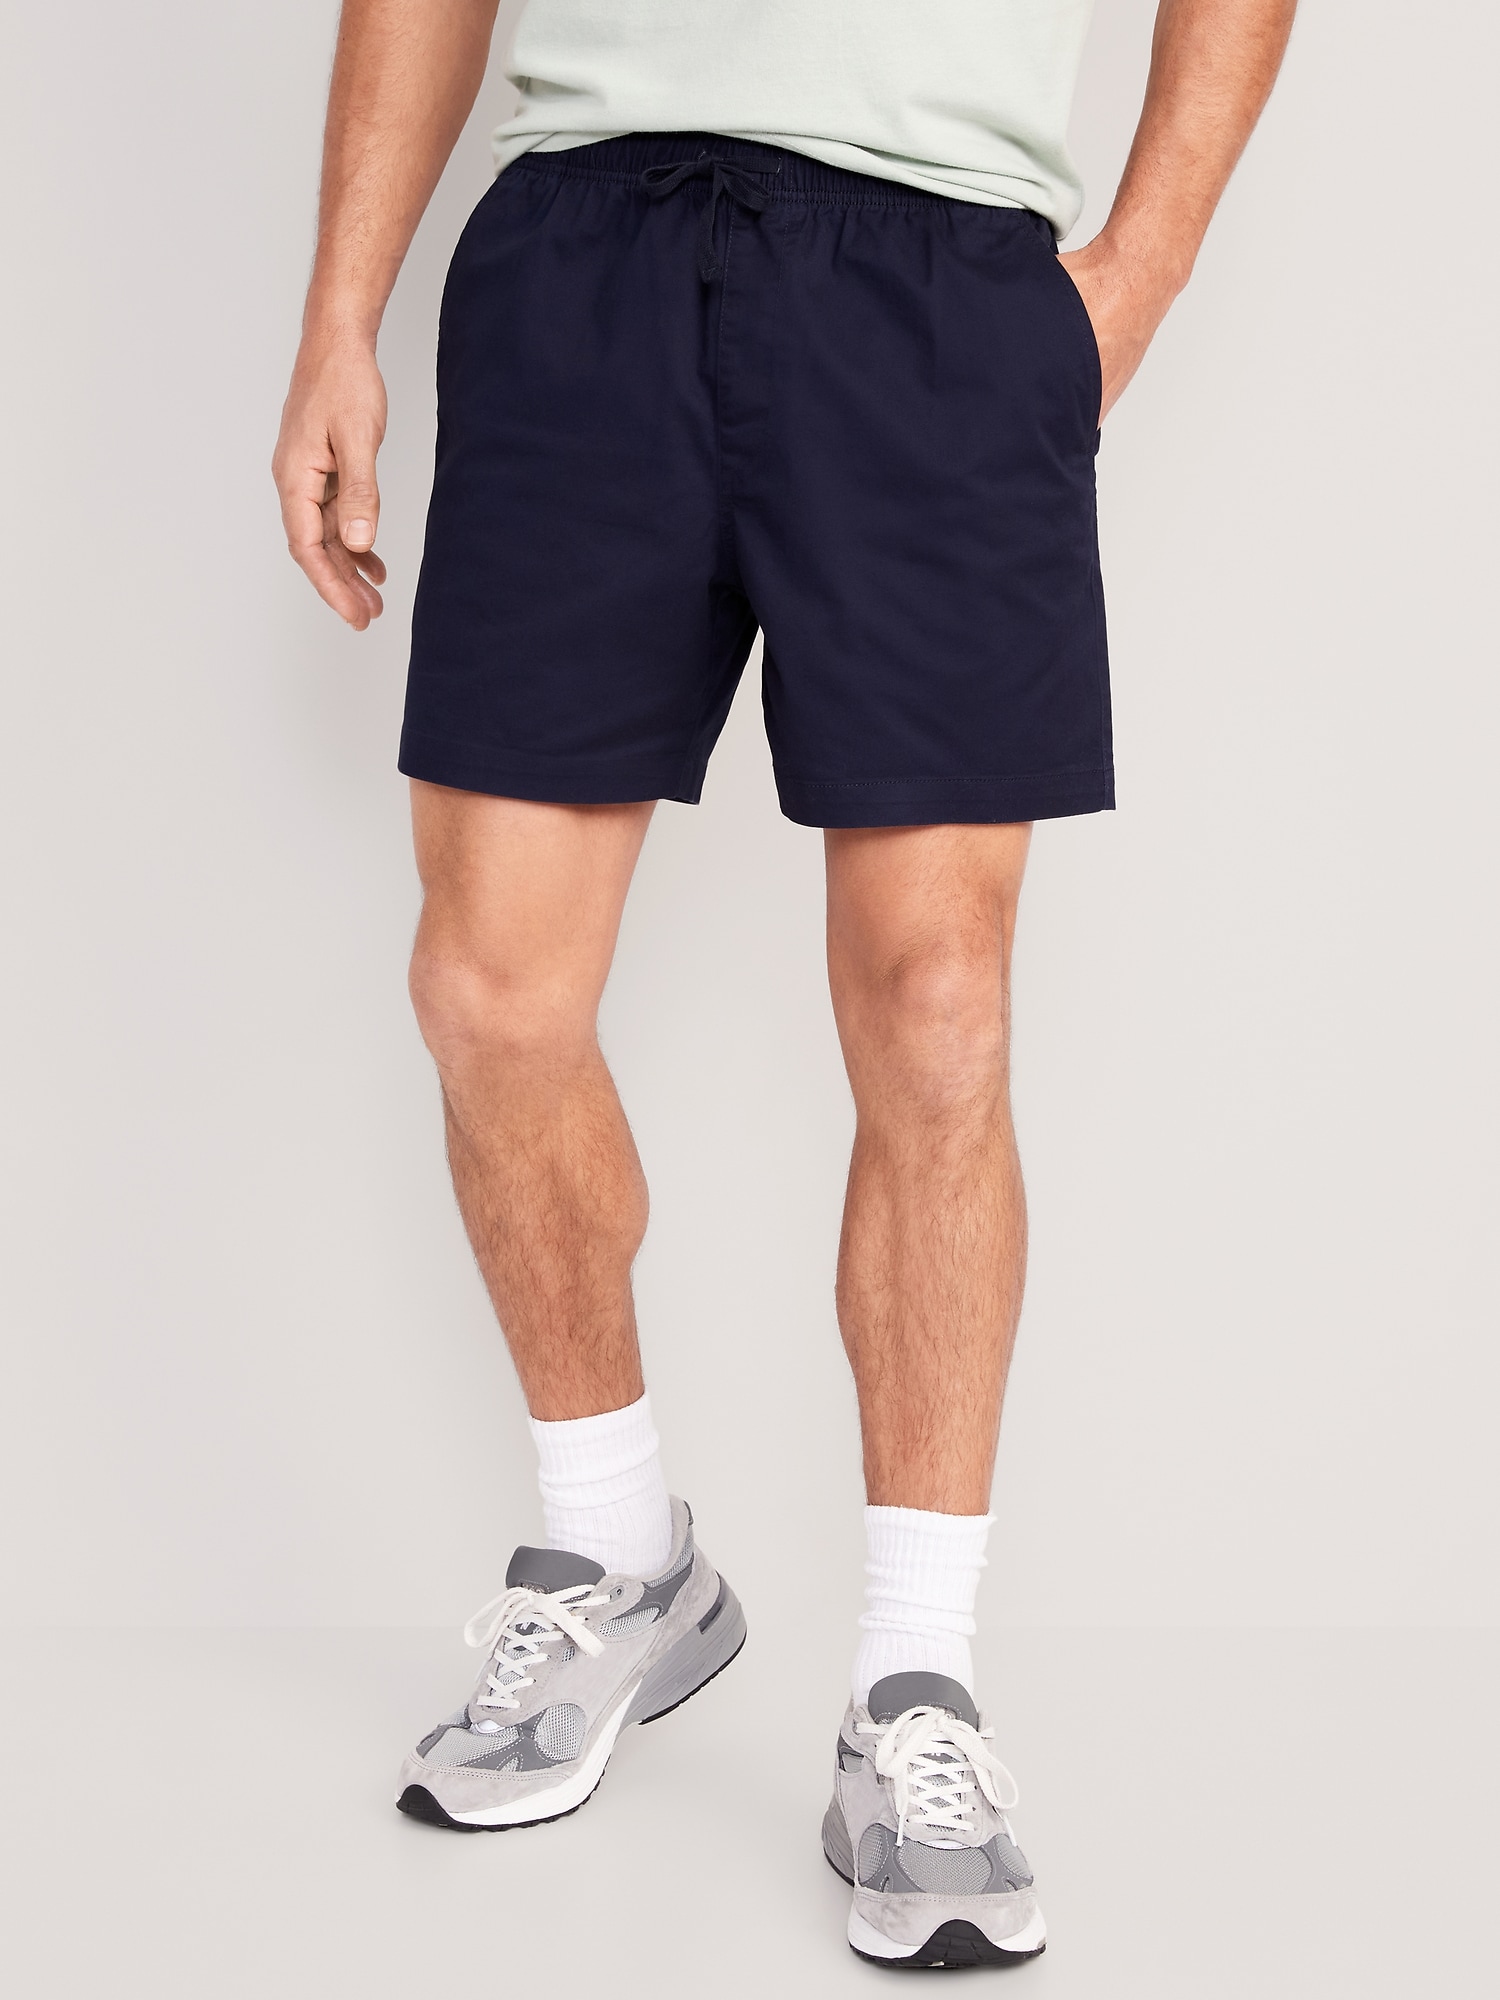 OGC Chino Jogger Shorts -- 5-inch inseam | Old Navy